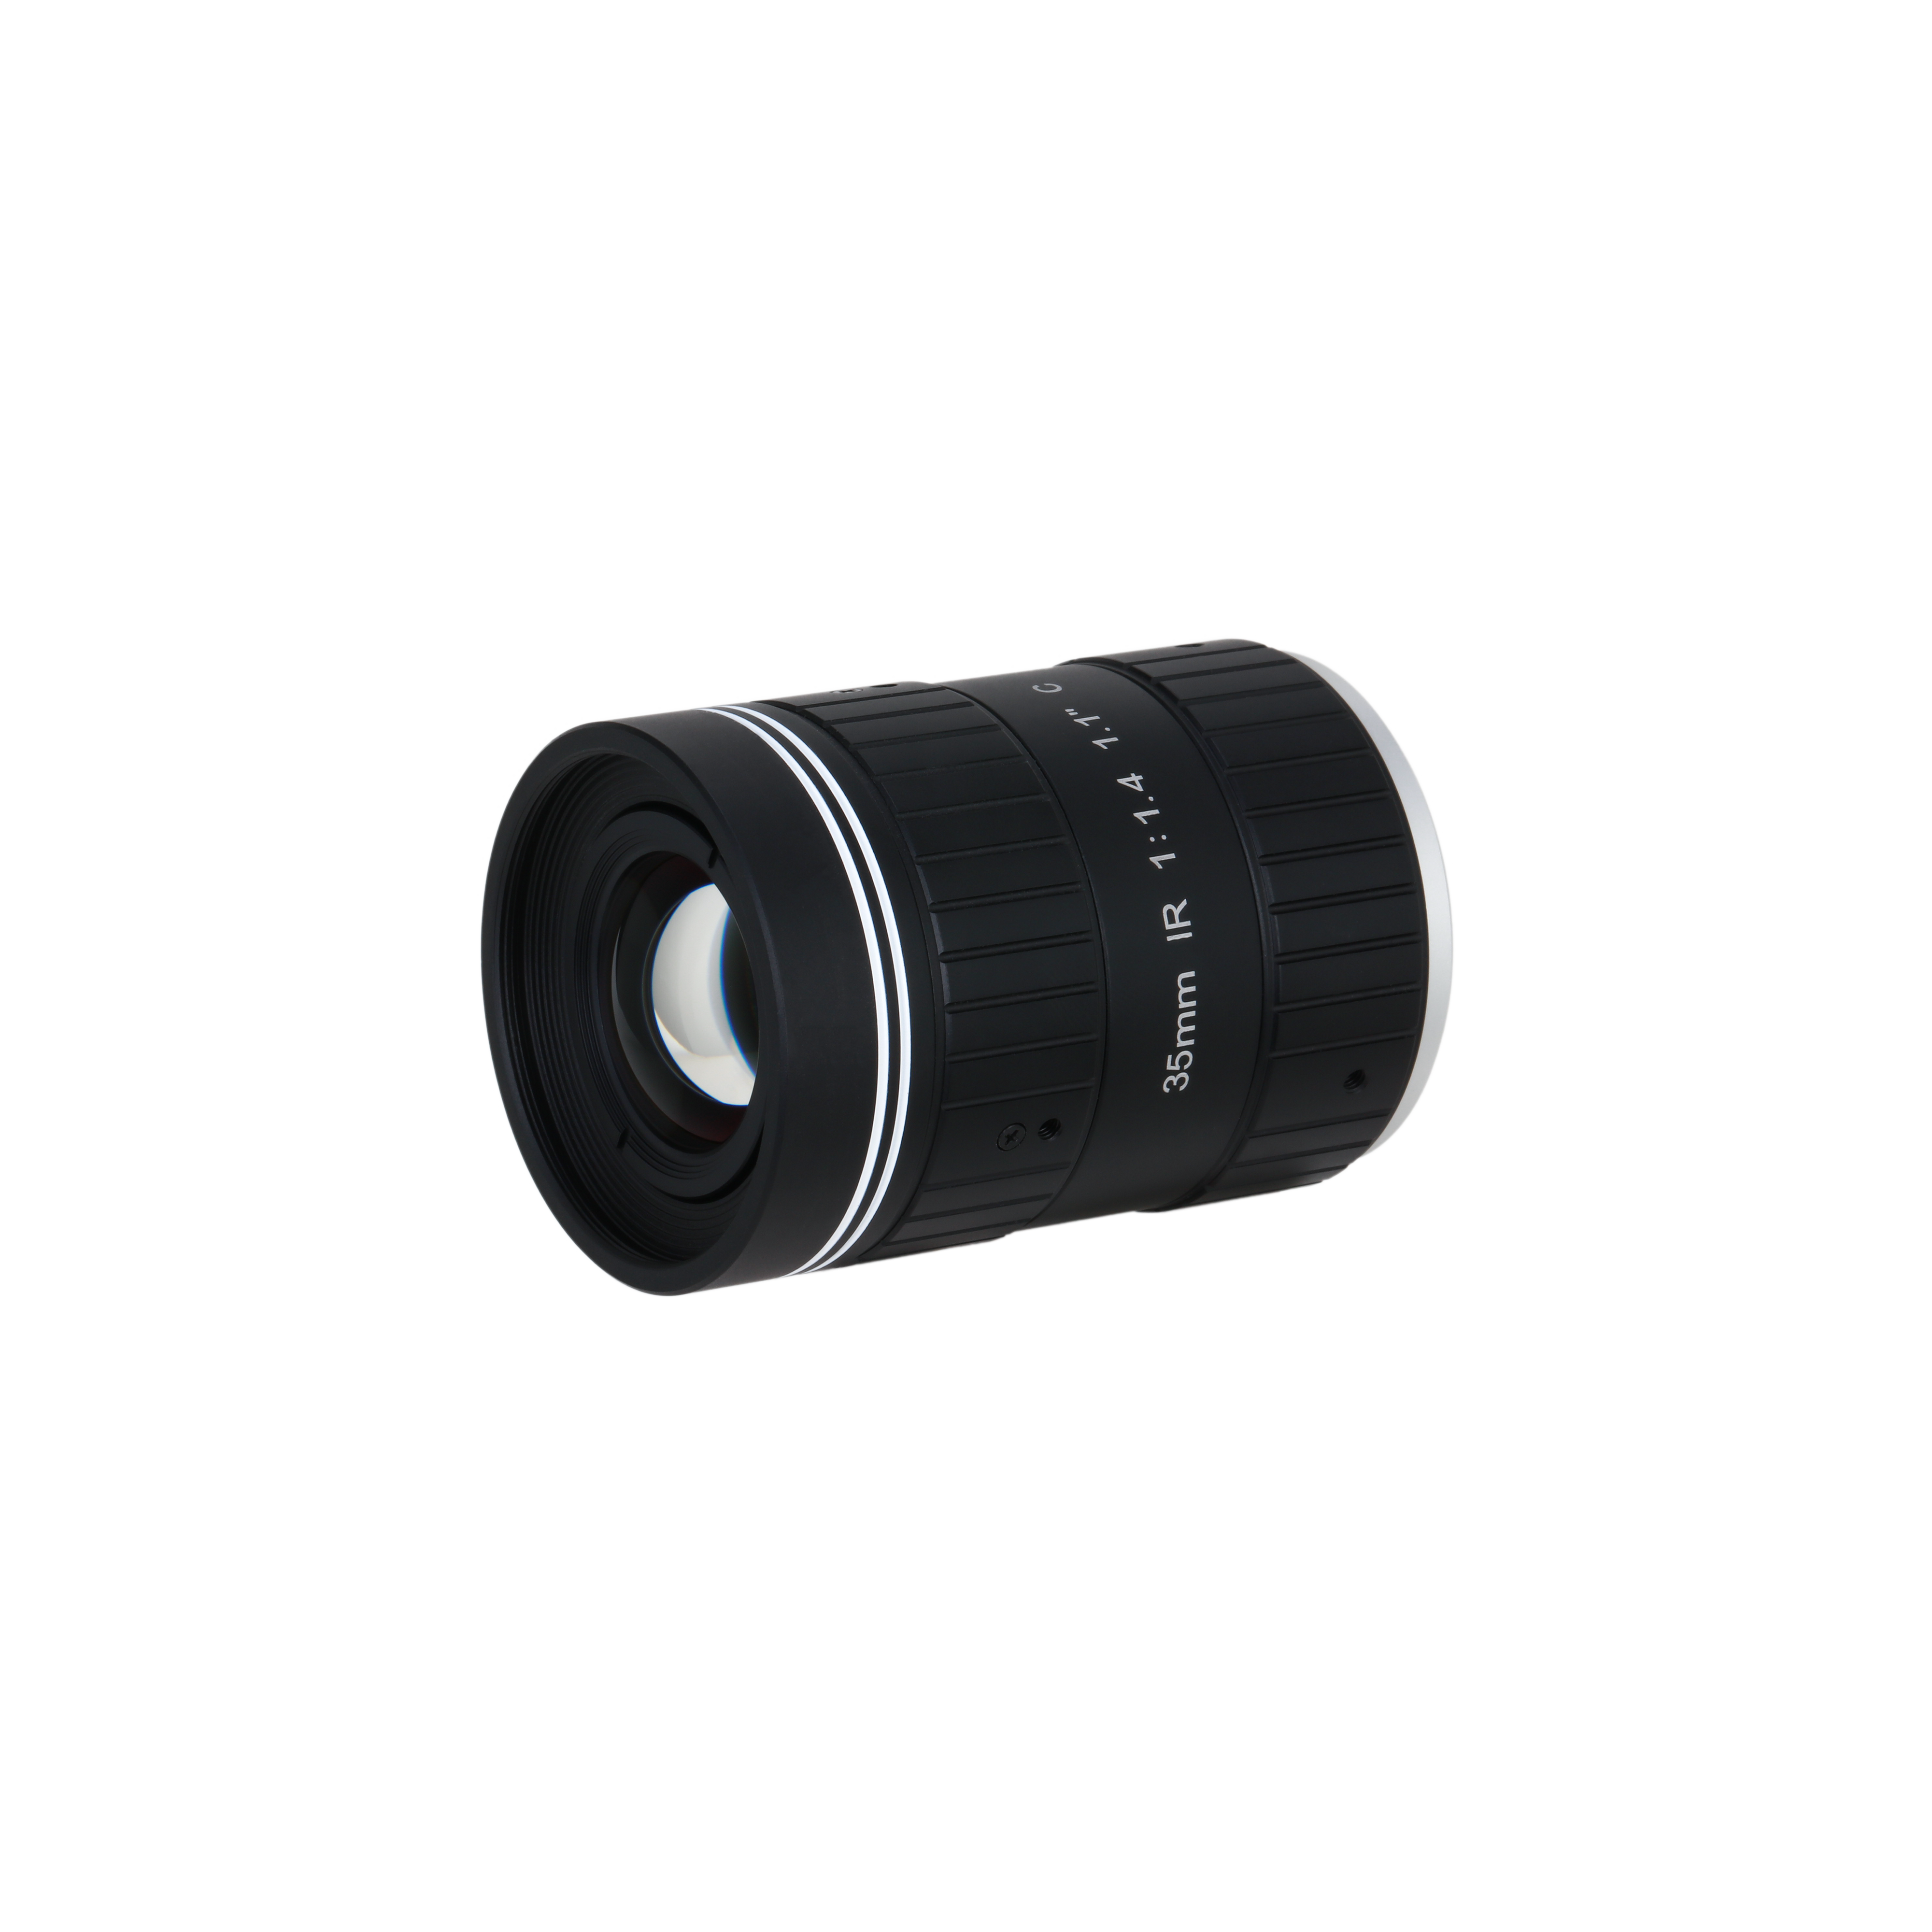 DAHUA PFL35-L12M-AIR 12MP 1.1" F1.4 35mm Fixed-focal Lens